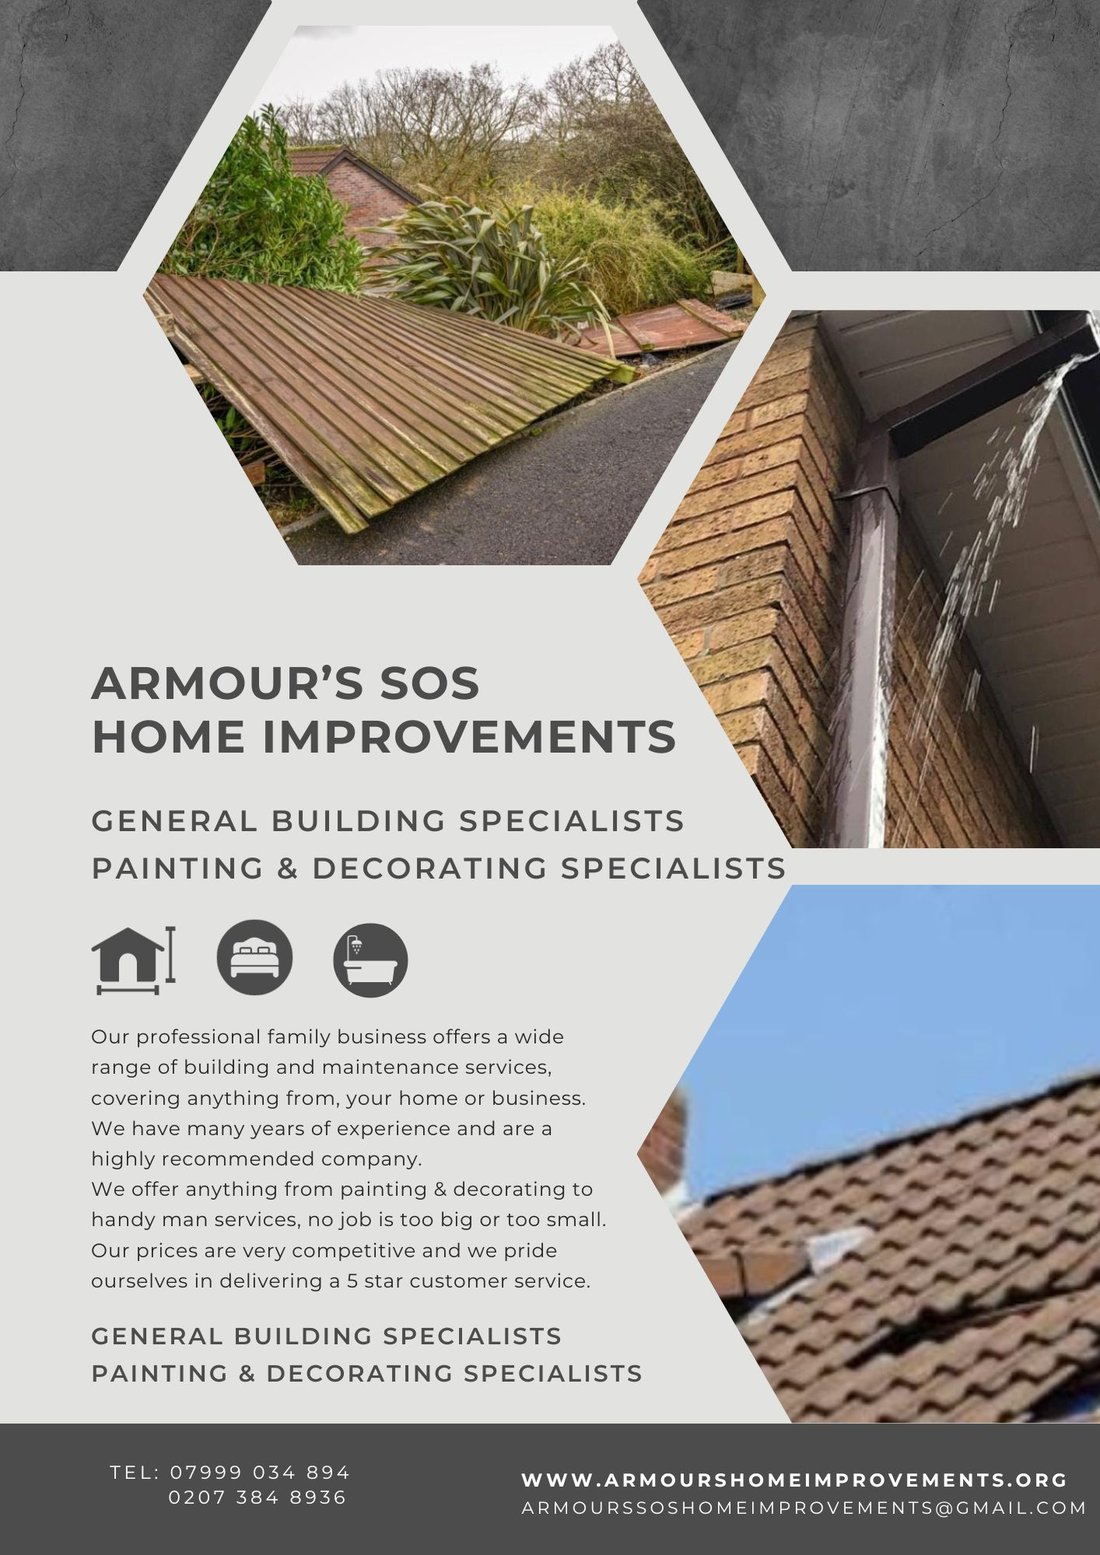 Main header - "Armours SOS Home Improvements"